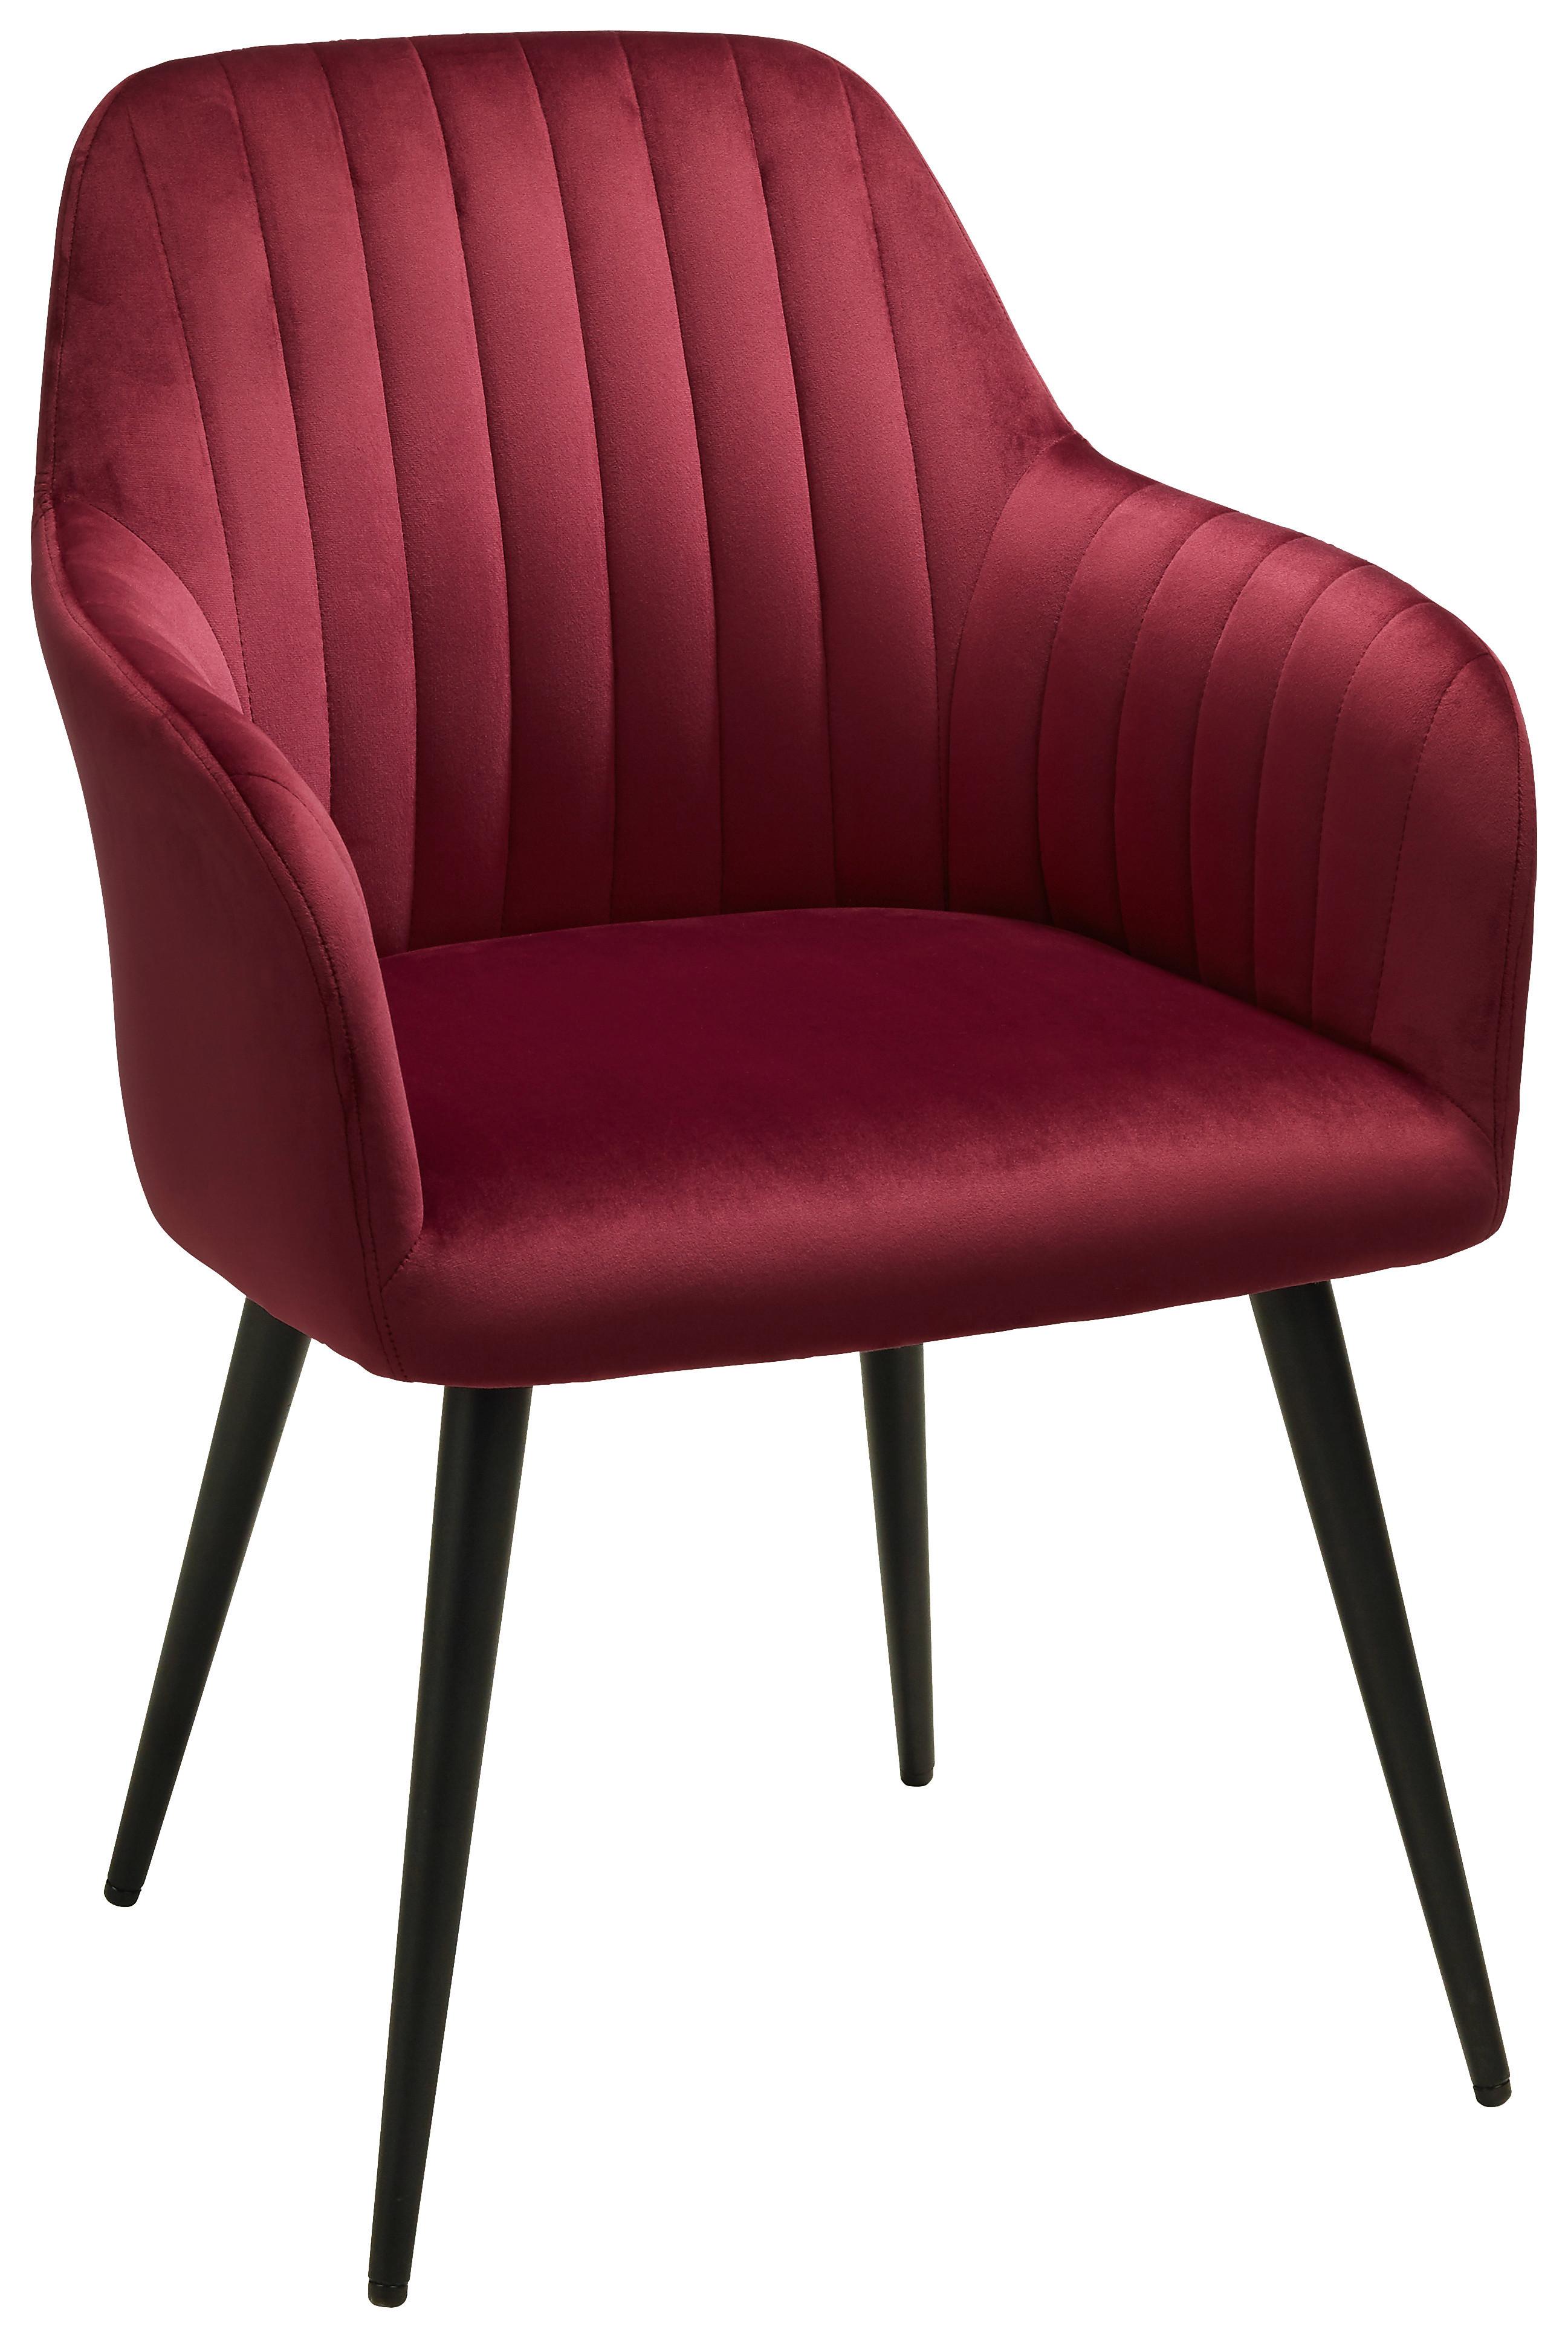 Židle S Područkami Martha -Top- - magenta/černá, Moderní, kov/textil (57/83,5/58cm) - Modern Living